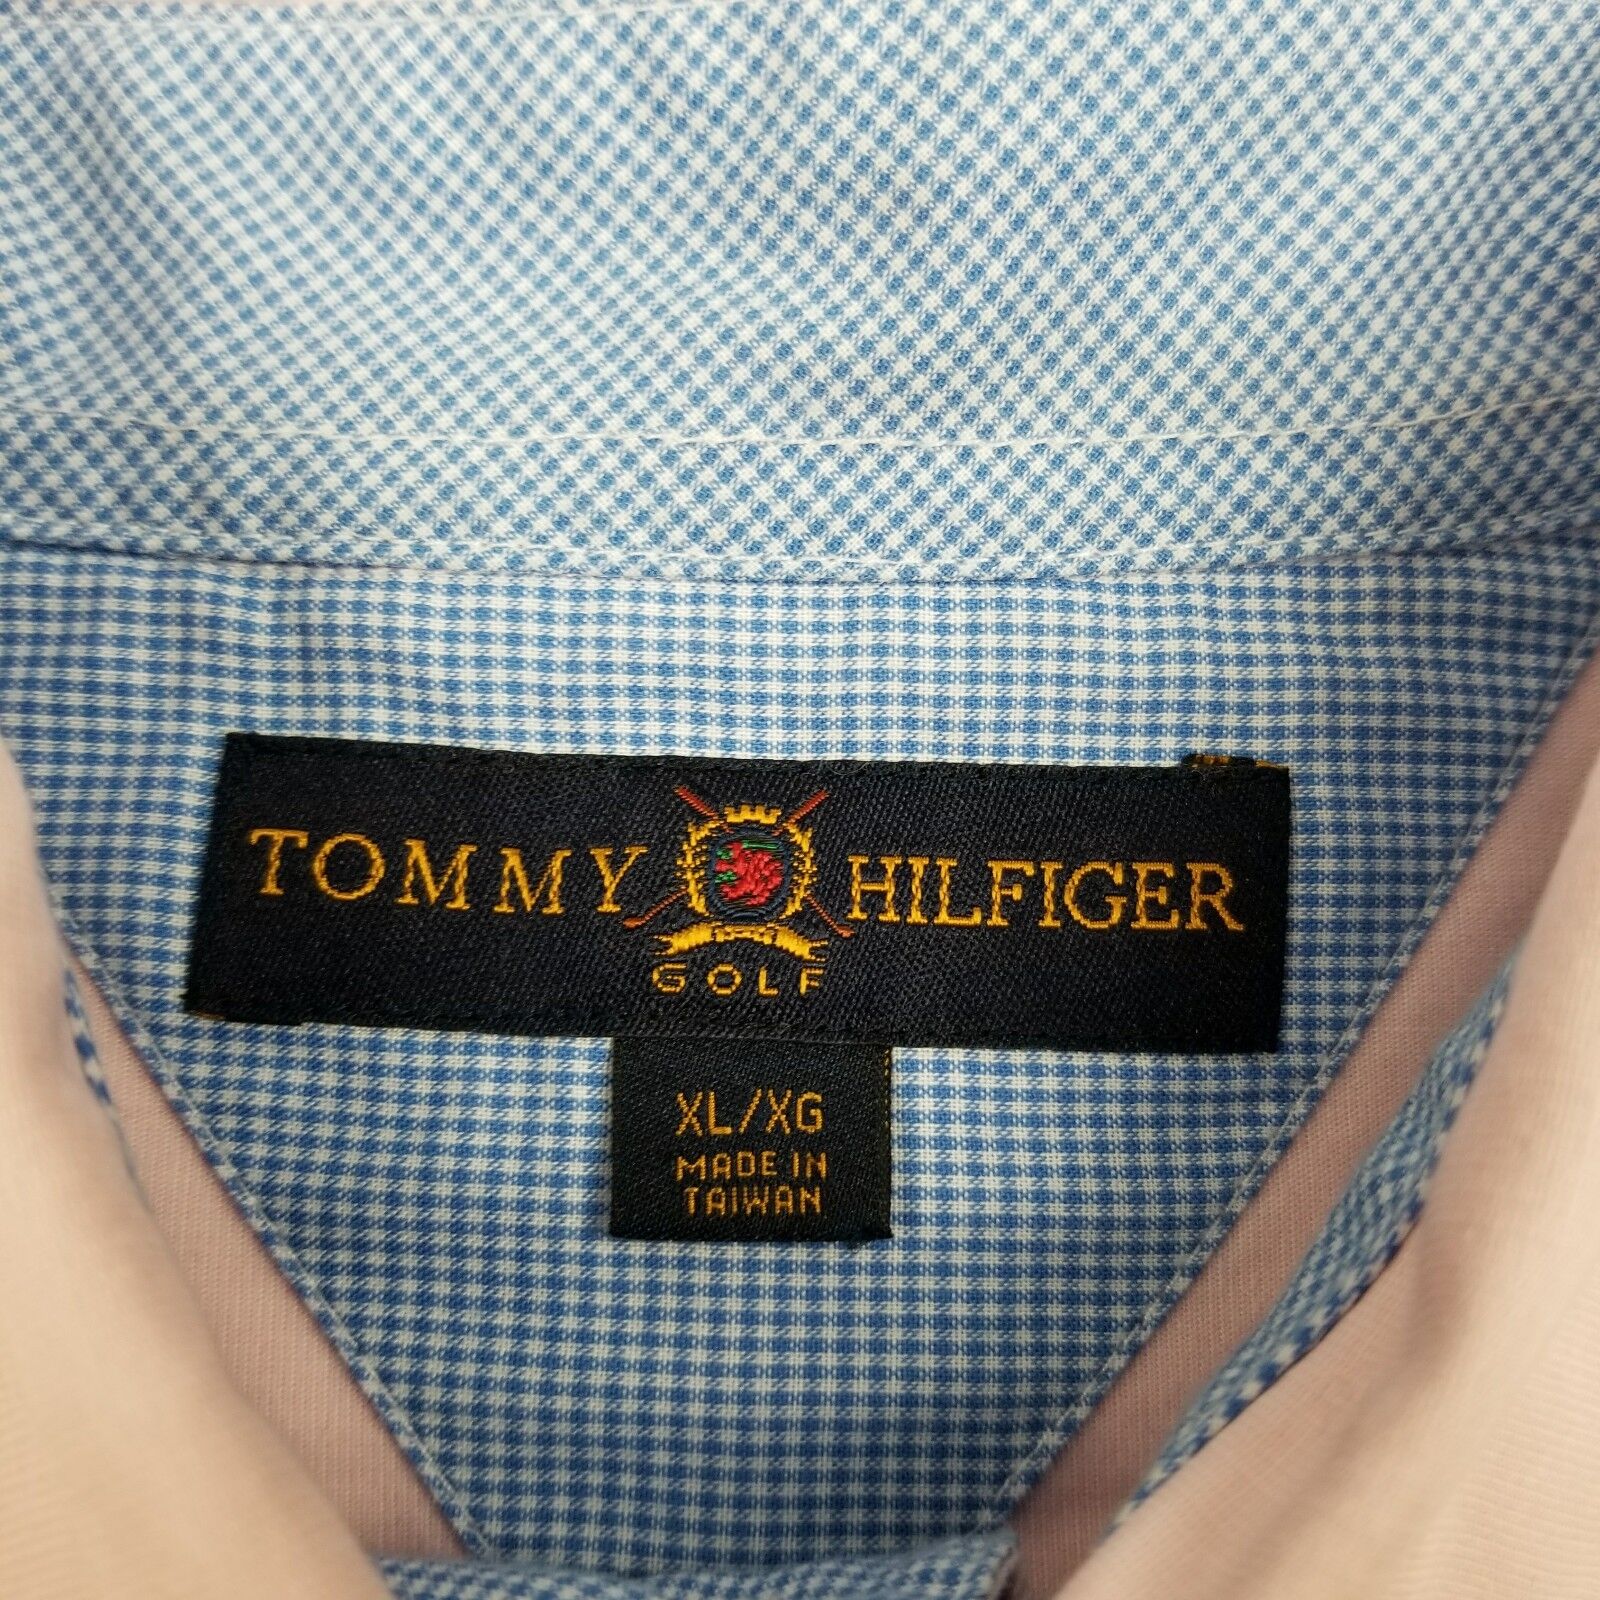 Tommy Hilfiger Golf Men's Button Up Shirt Sz XL Embroidered Miami Speedway  Guc